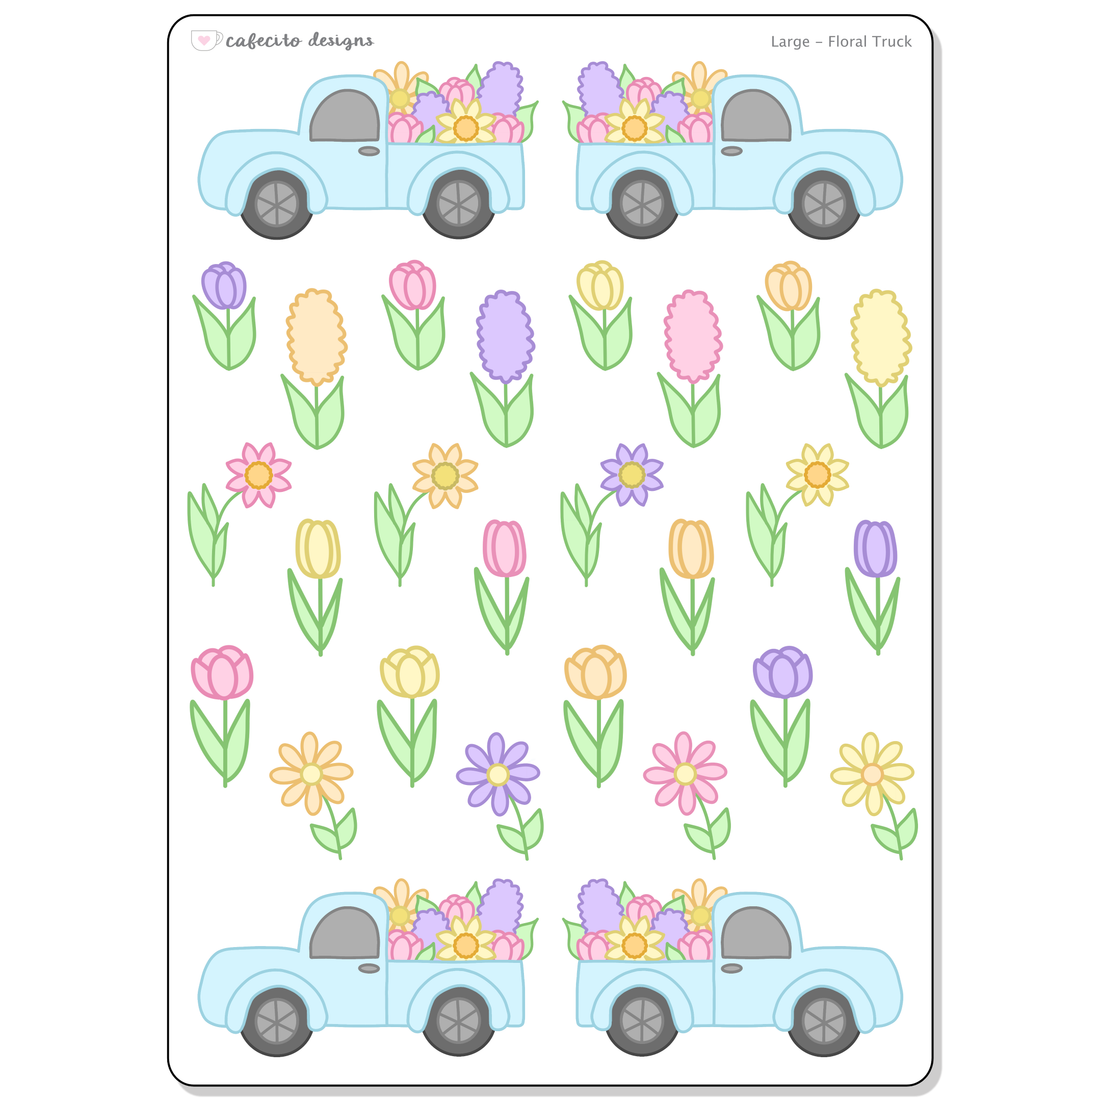 Floral Truck -  Large Deco Sticker Sheet